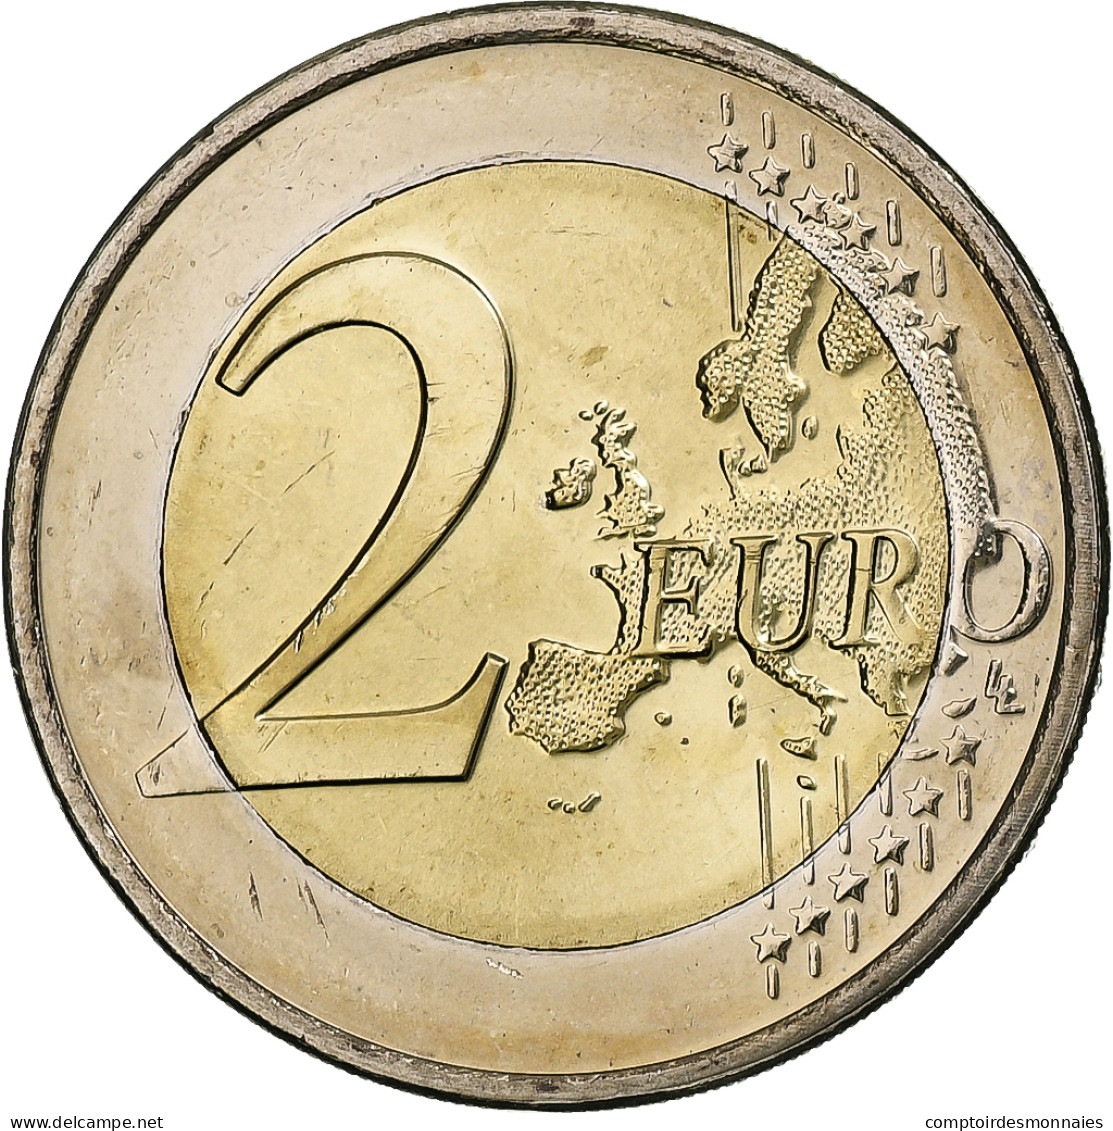 Luxembourg, 2 Euro, Pont Grande Duchesse Charlotte, 2016, FDC, Bimétallique - Luxembourg